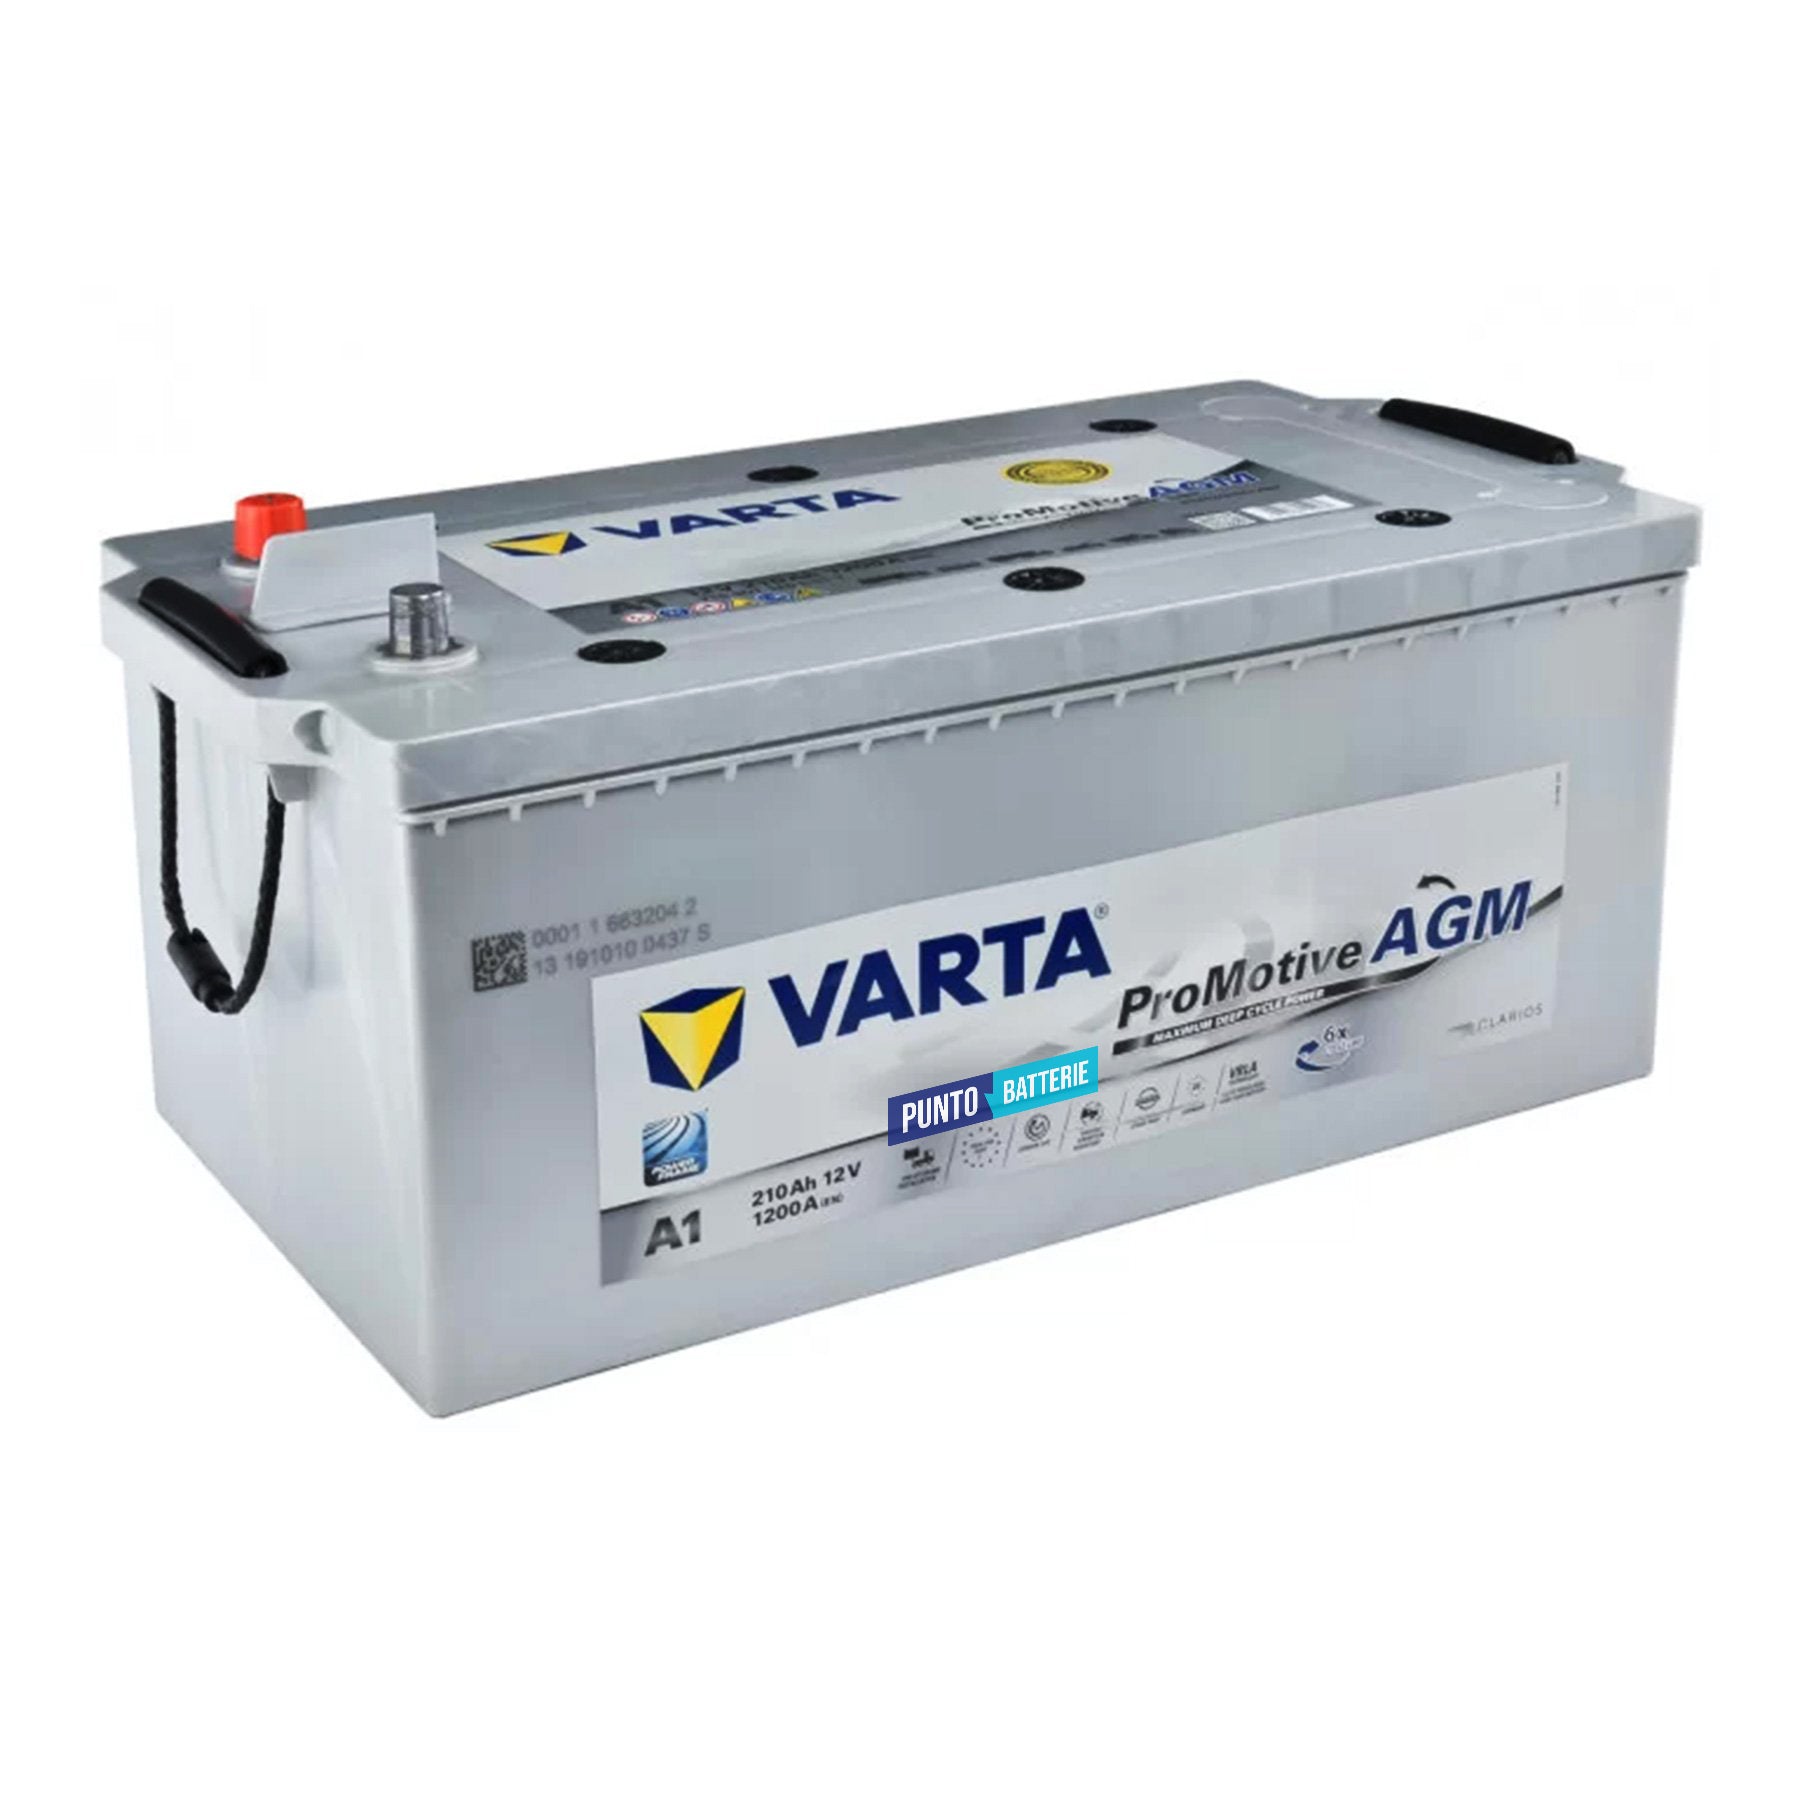 VARTA N9 PROmotive Silver 225Ah Batteries camion